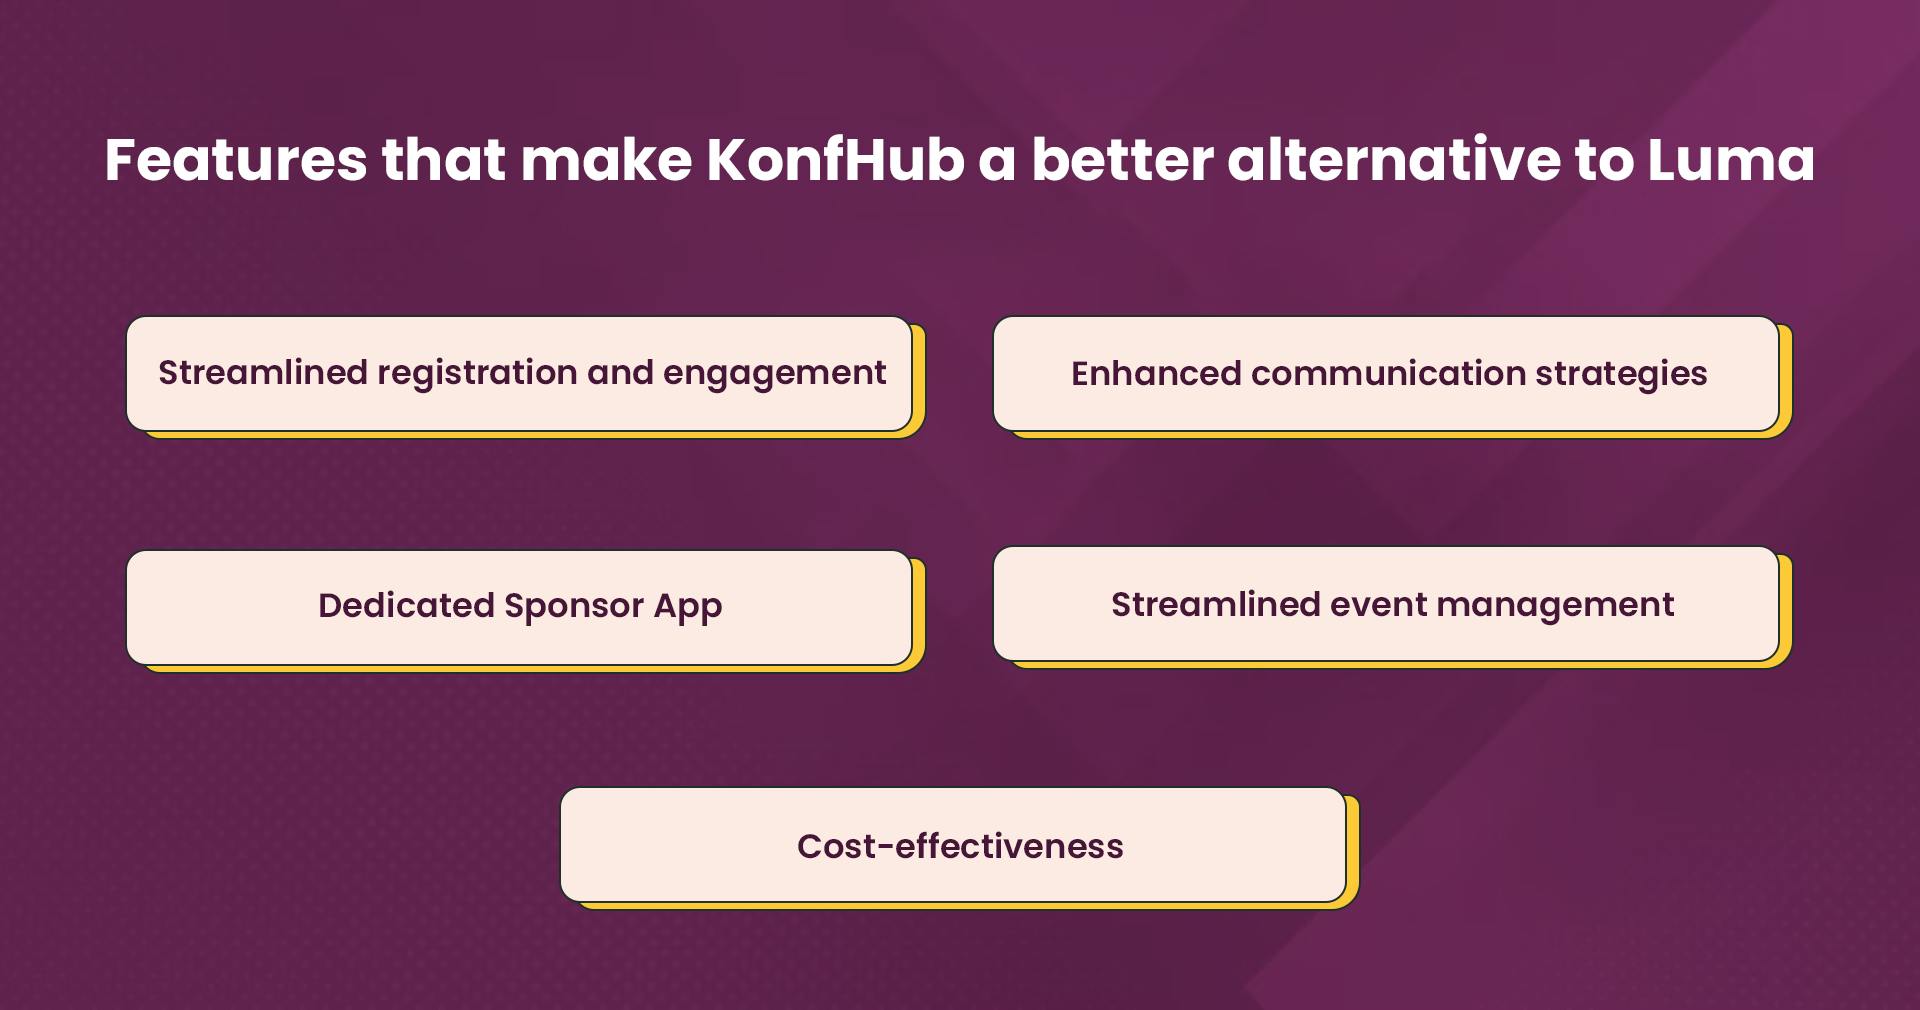 Why KonfHub is a better alternative to Luma